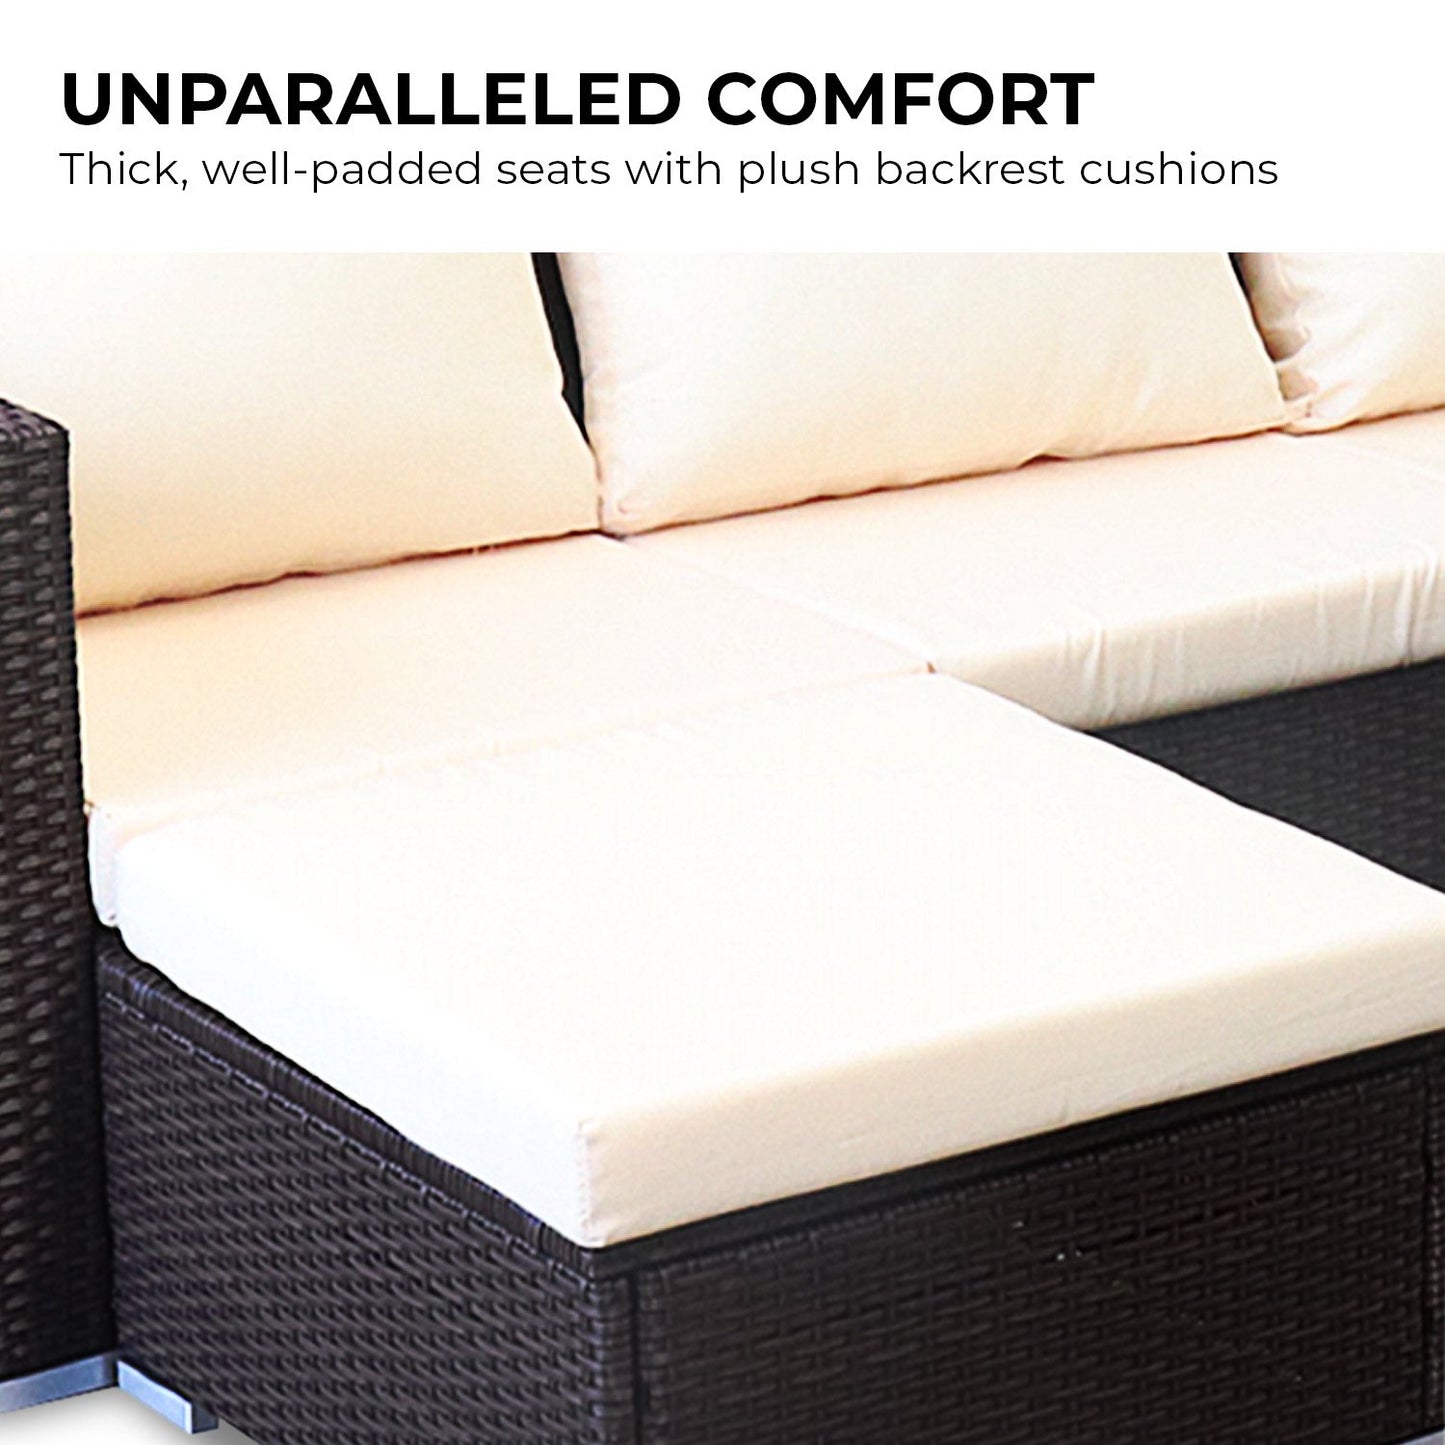 Outdoor Lounge | 4 Seat | Modular Outdoor Sofa Setting | Sarantino Range | Brown